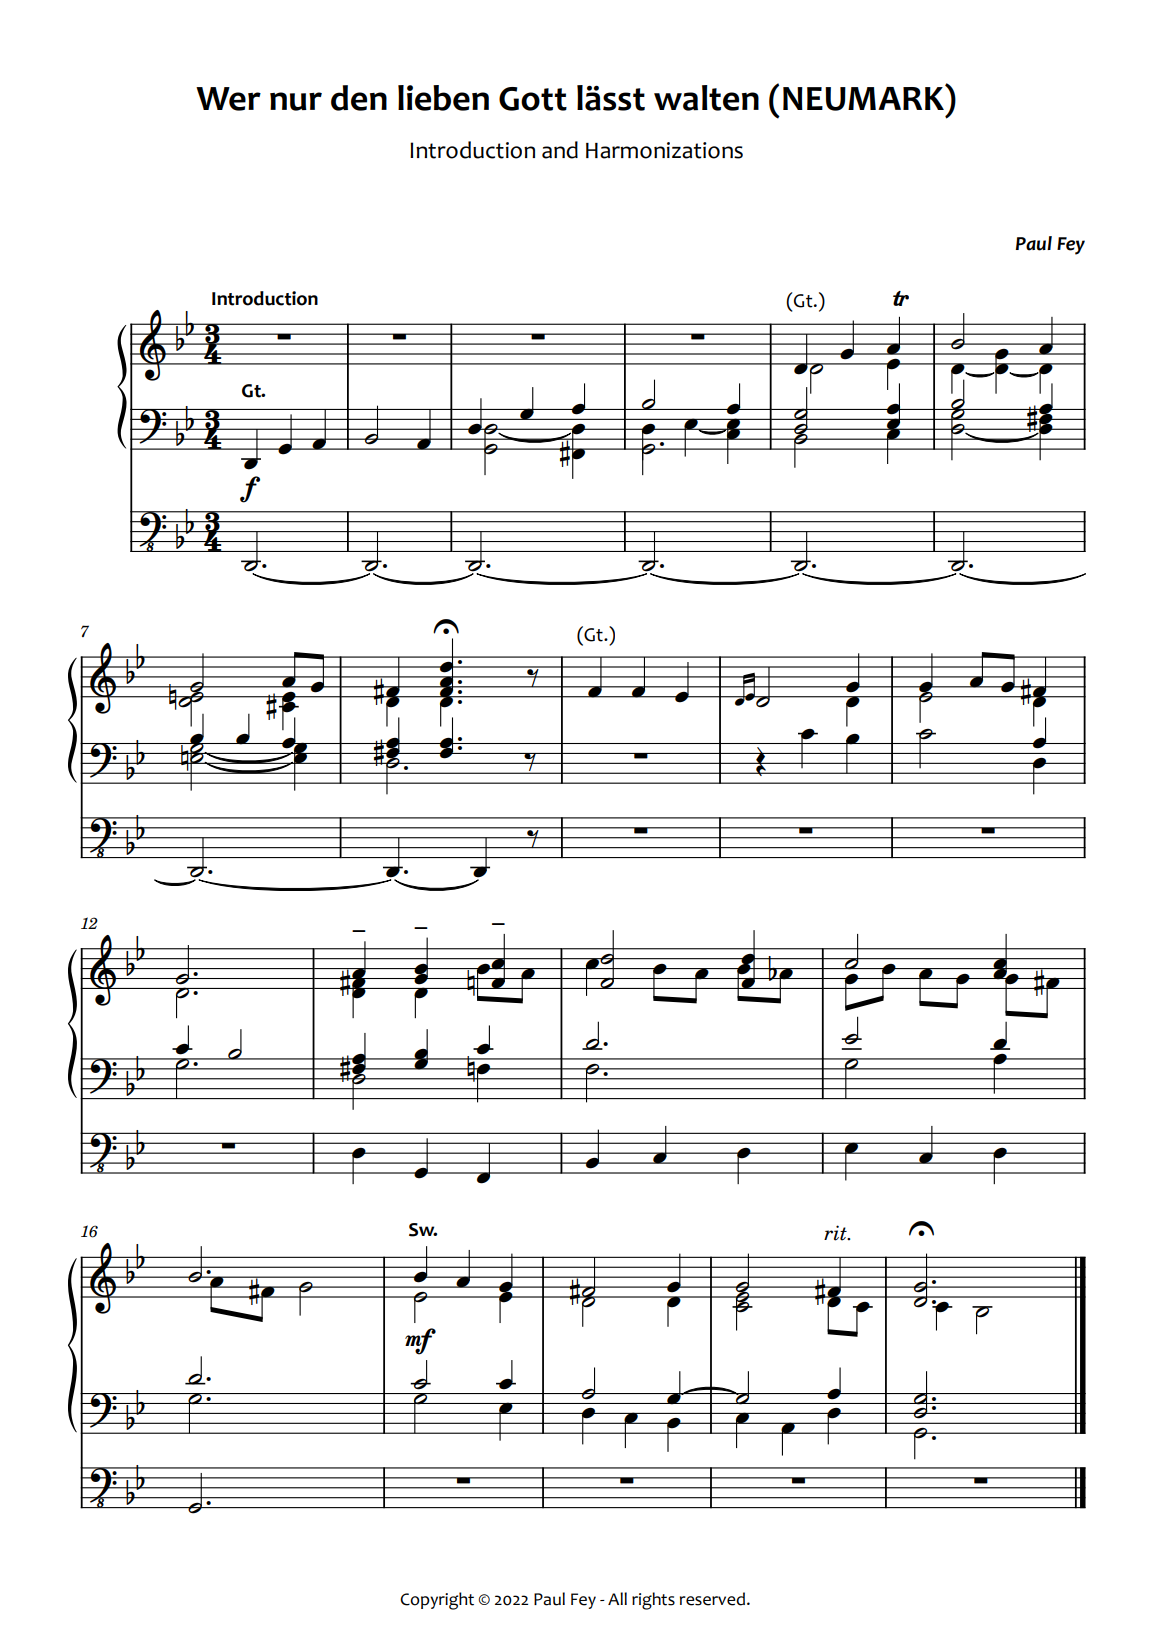 3 Favorite Hymns Harmonized (Sheet Music) - Music for Pipe Organ by Paul Fey